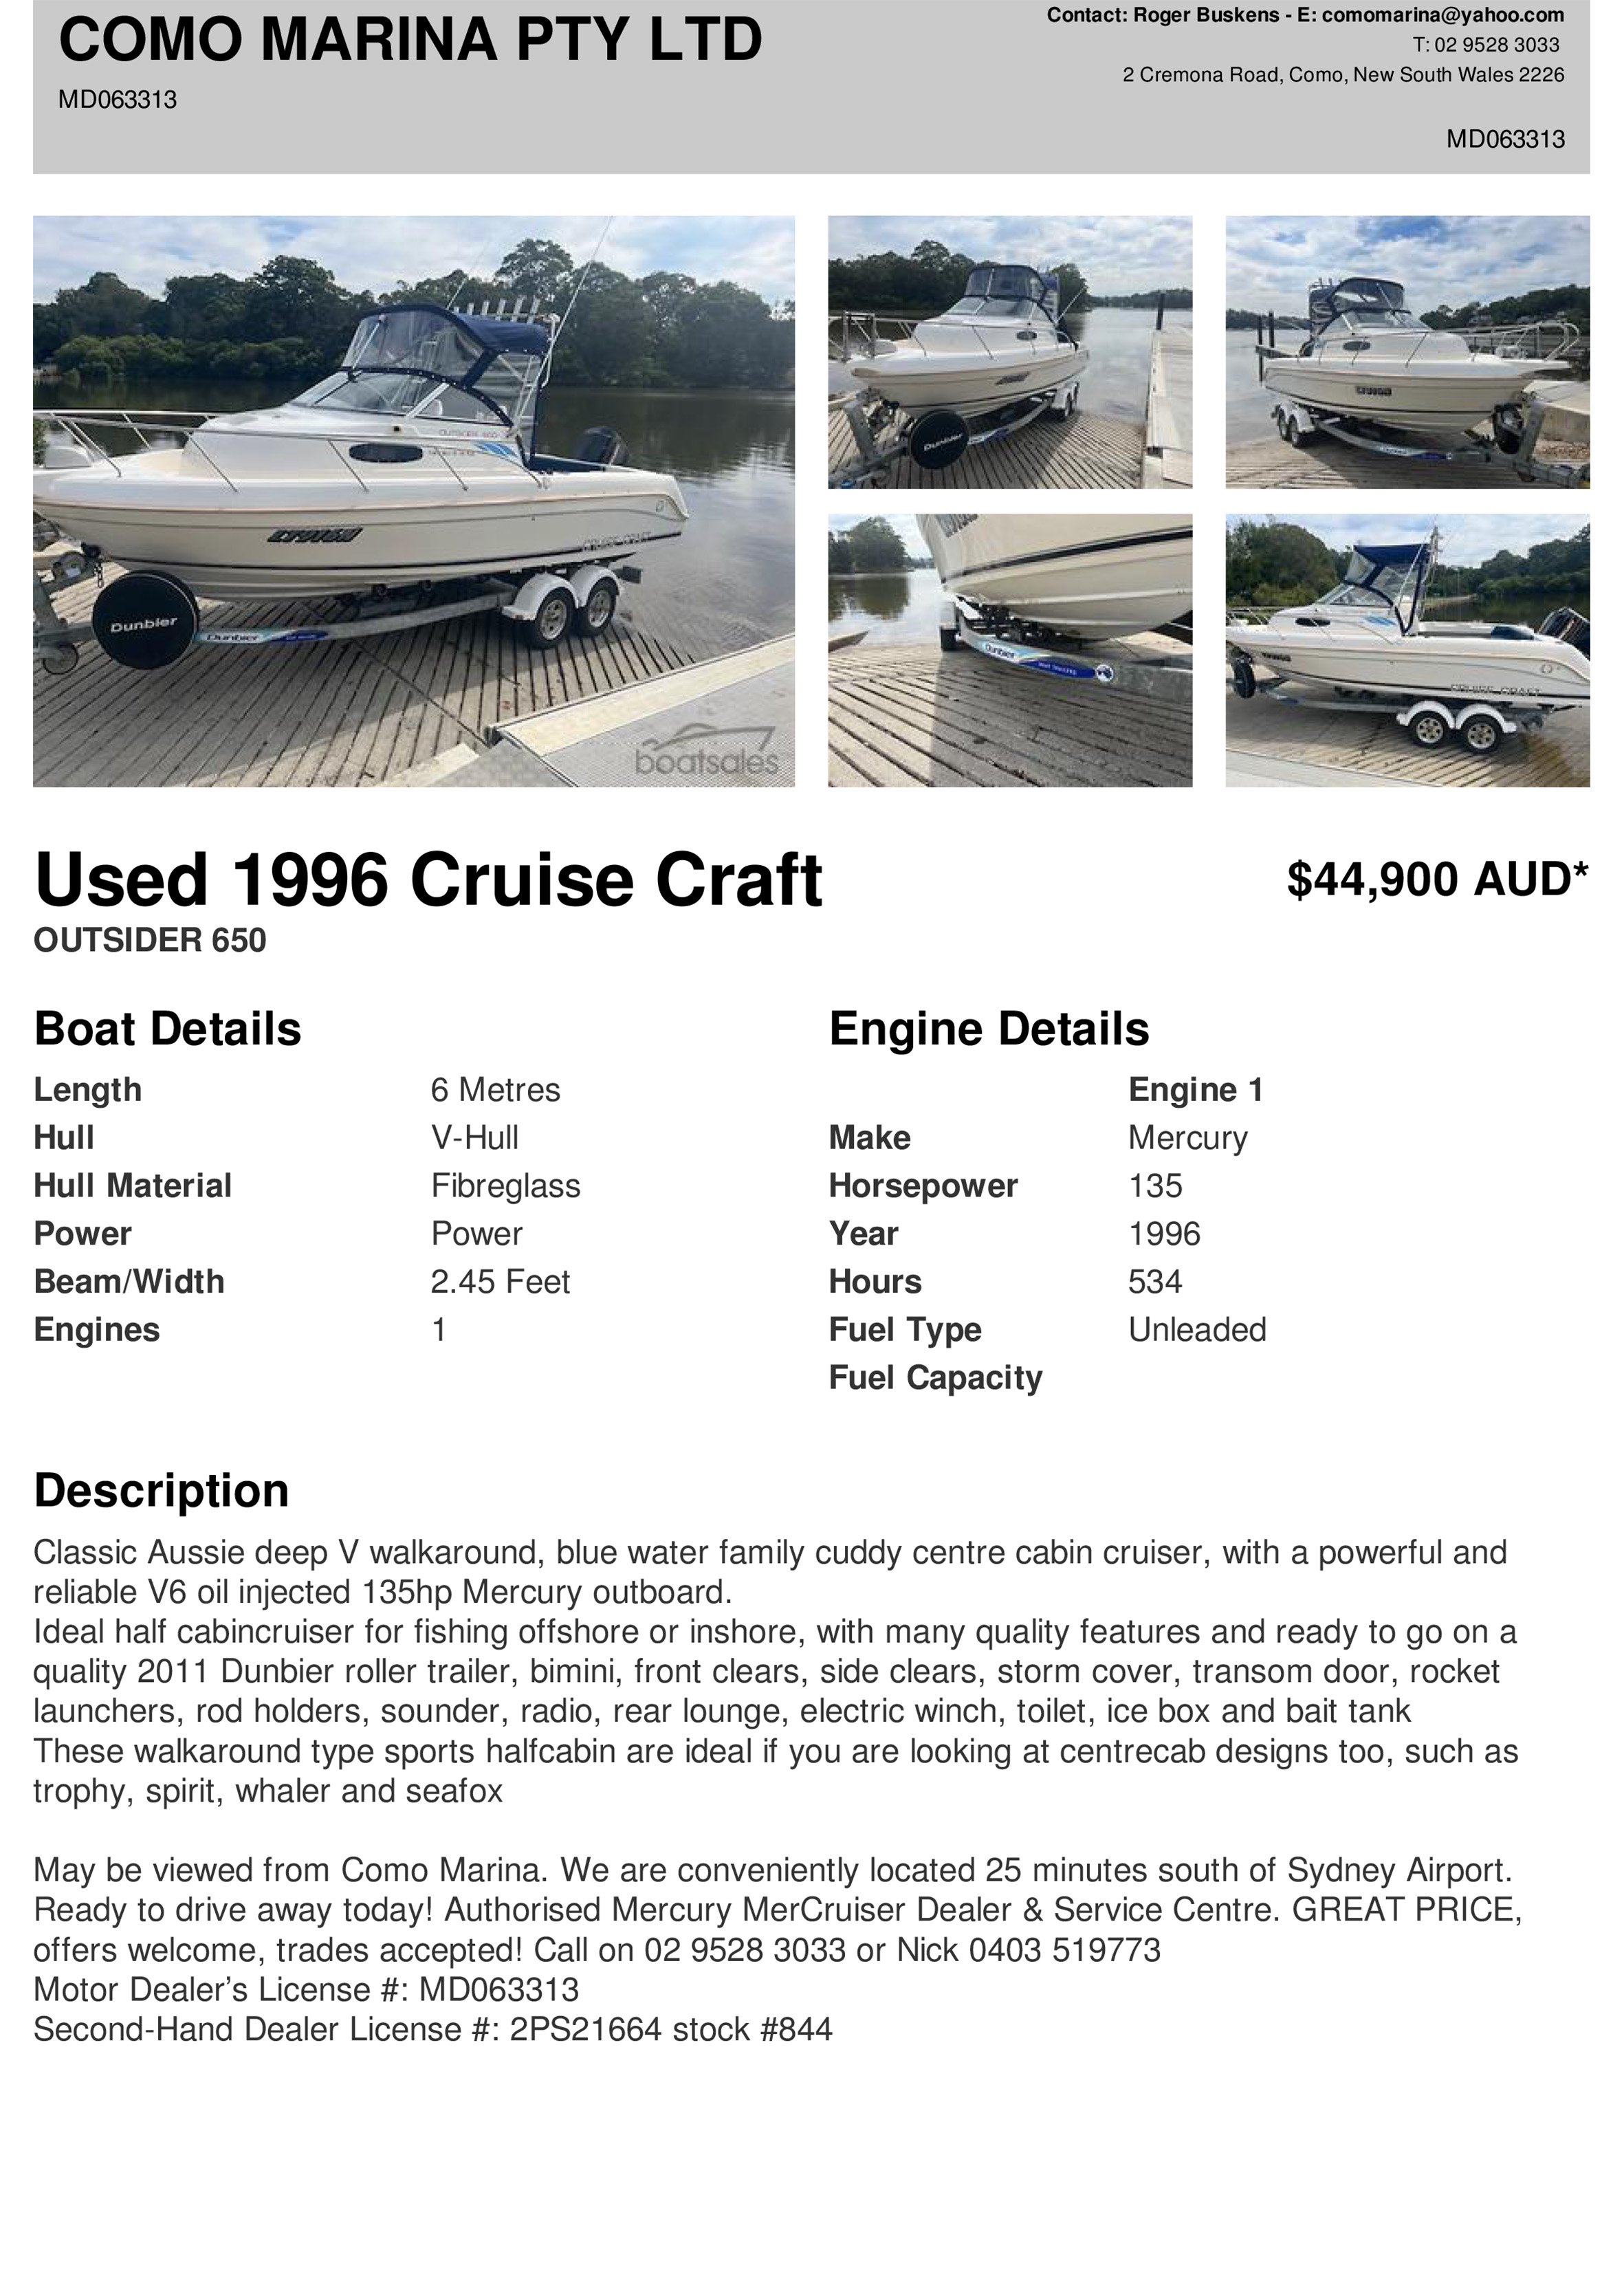 1996_Cruise Craft_OUTSIDER 650.jpg